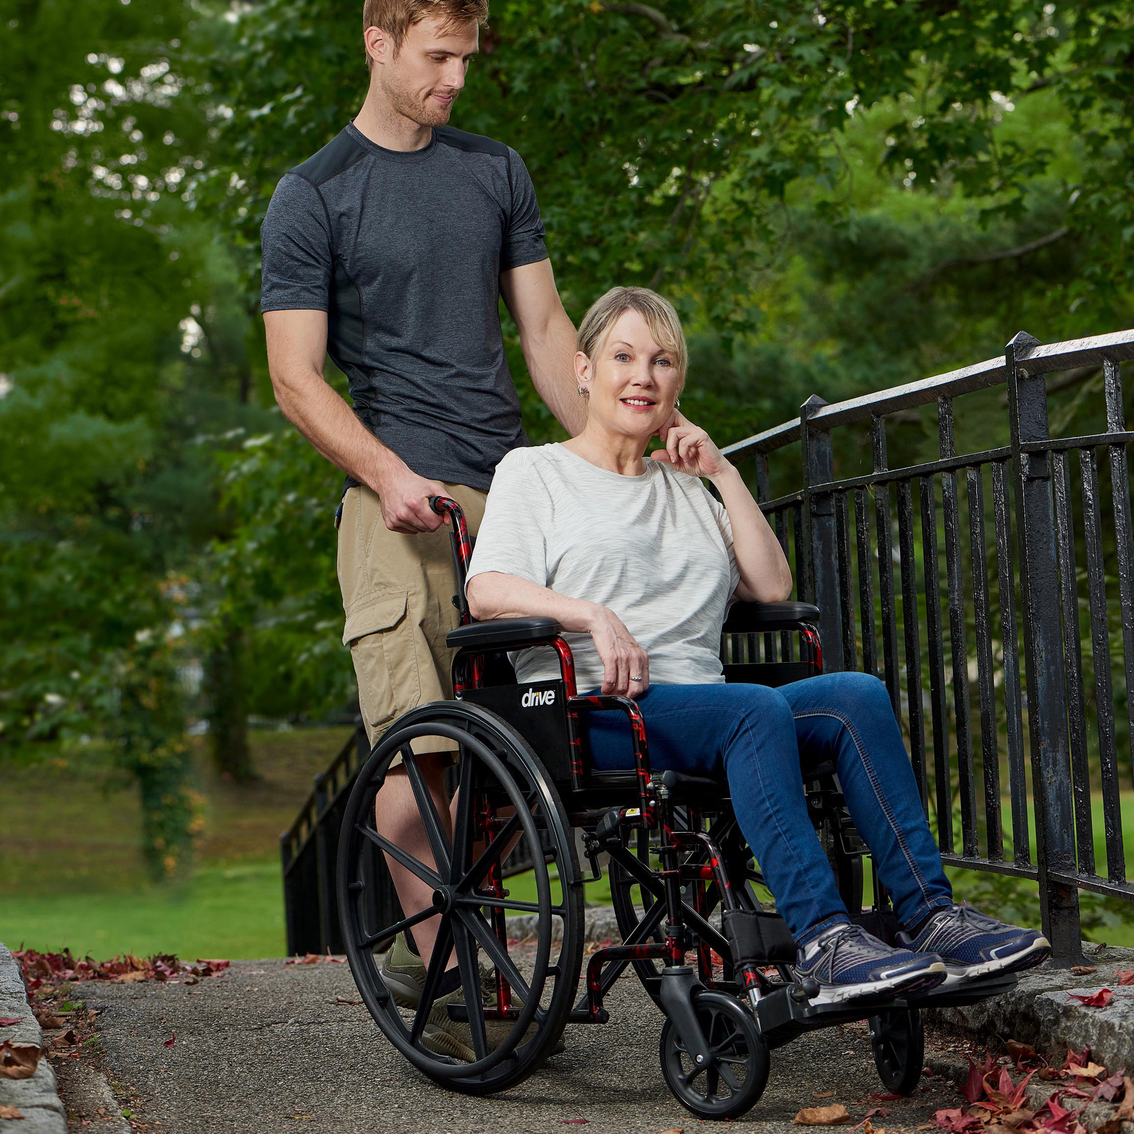 Drive Medical Rebel Lightweight Wheelchair - Image 4 of 4